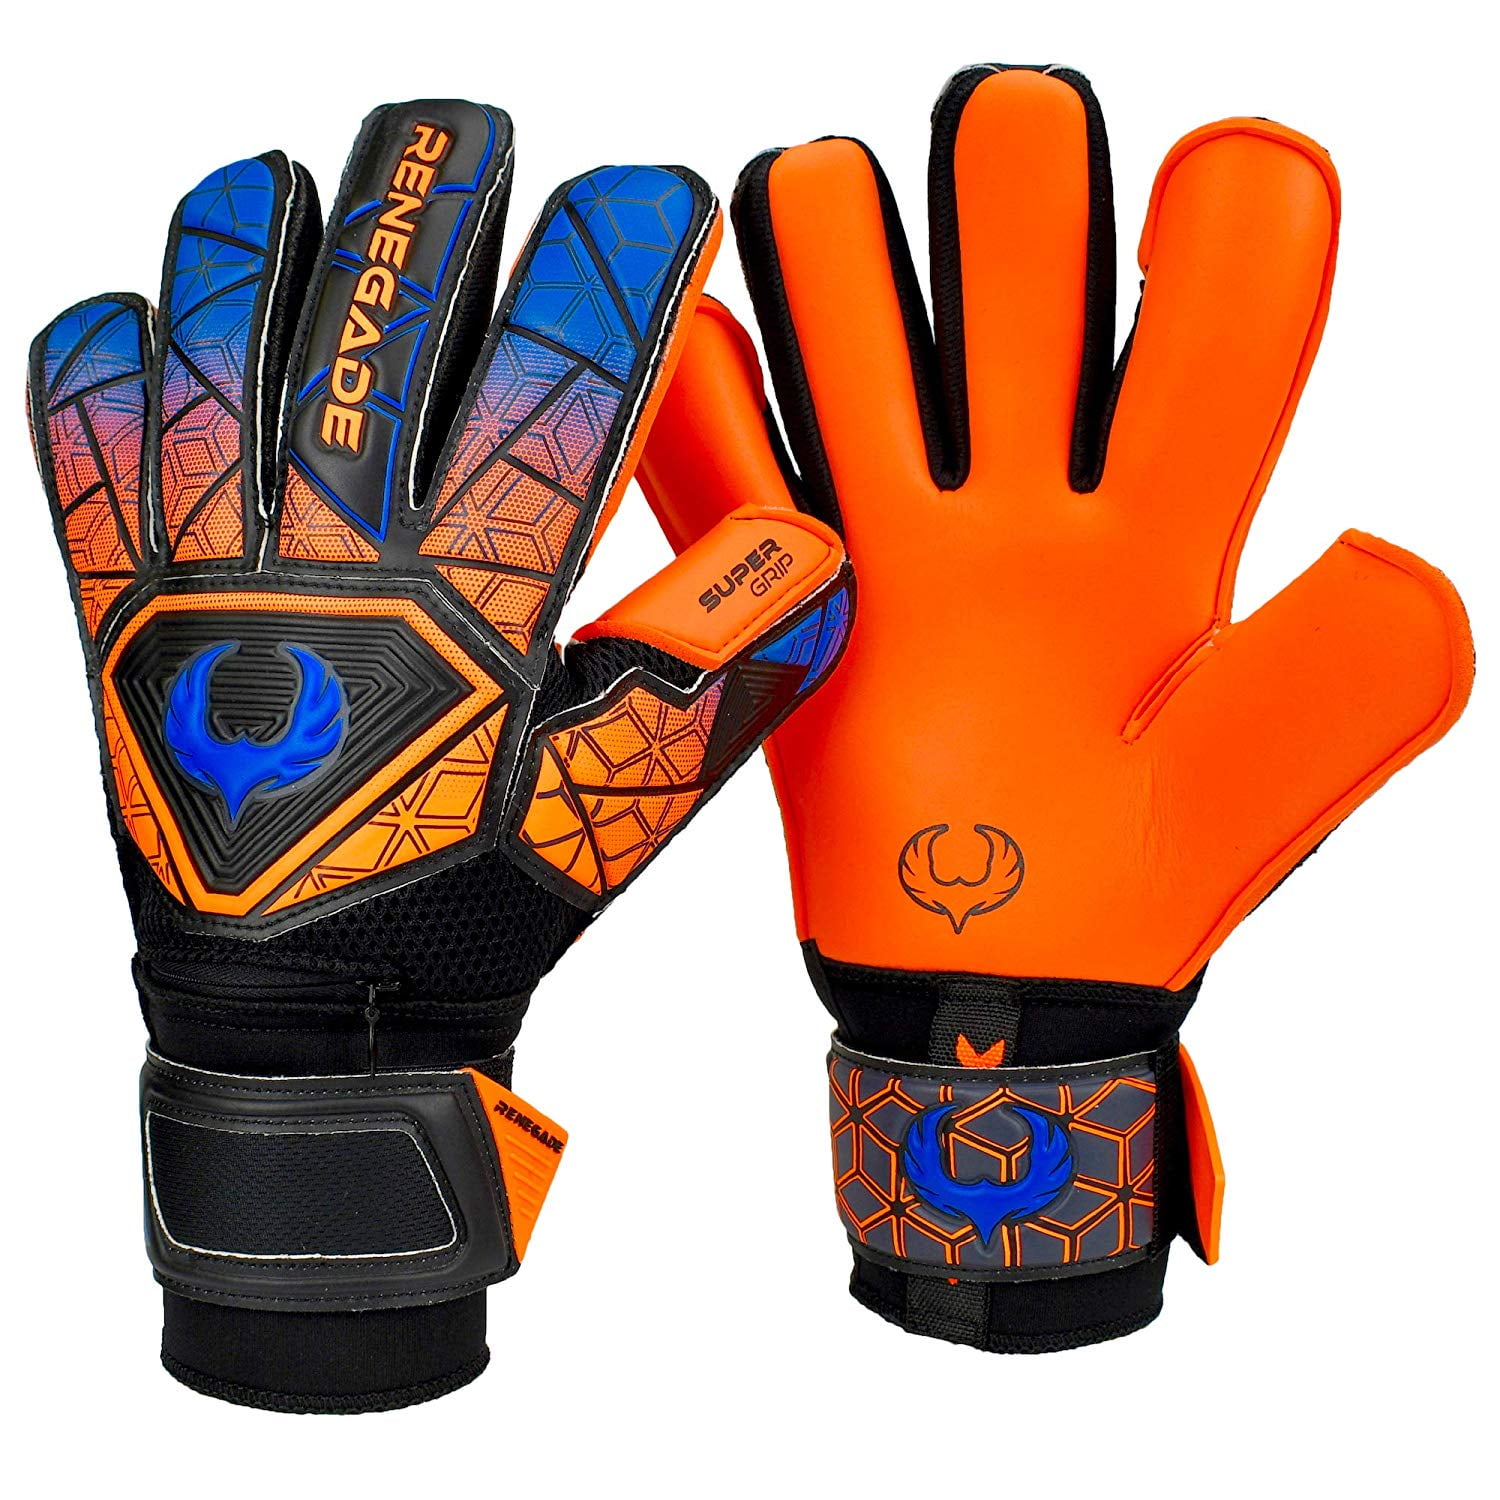 GK Saver Football Goalkeeper Goalie Gloves Camo Blue Negative Cut Gk Gloves